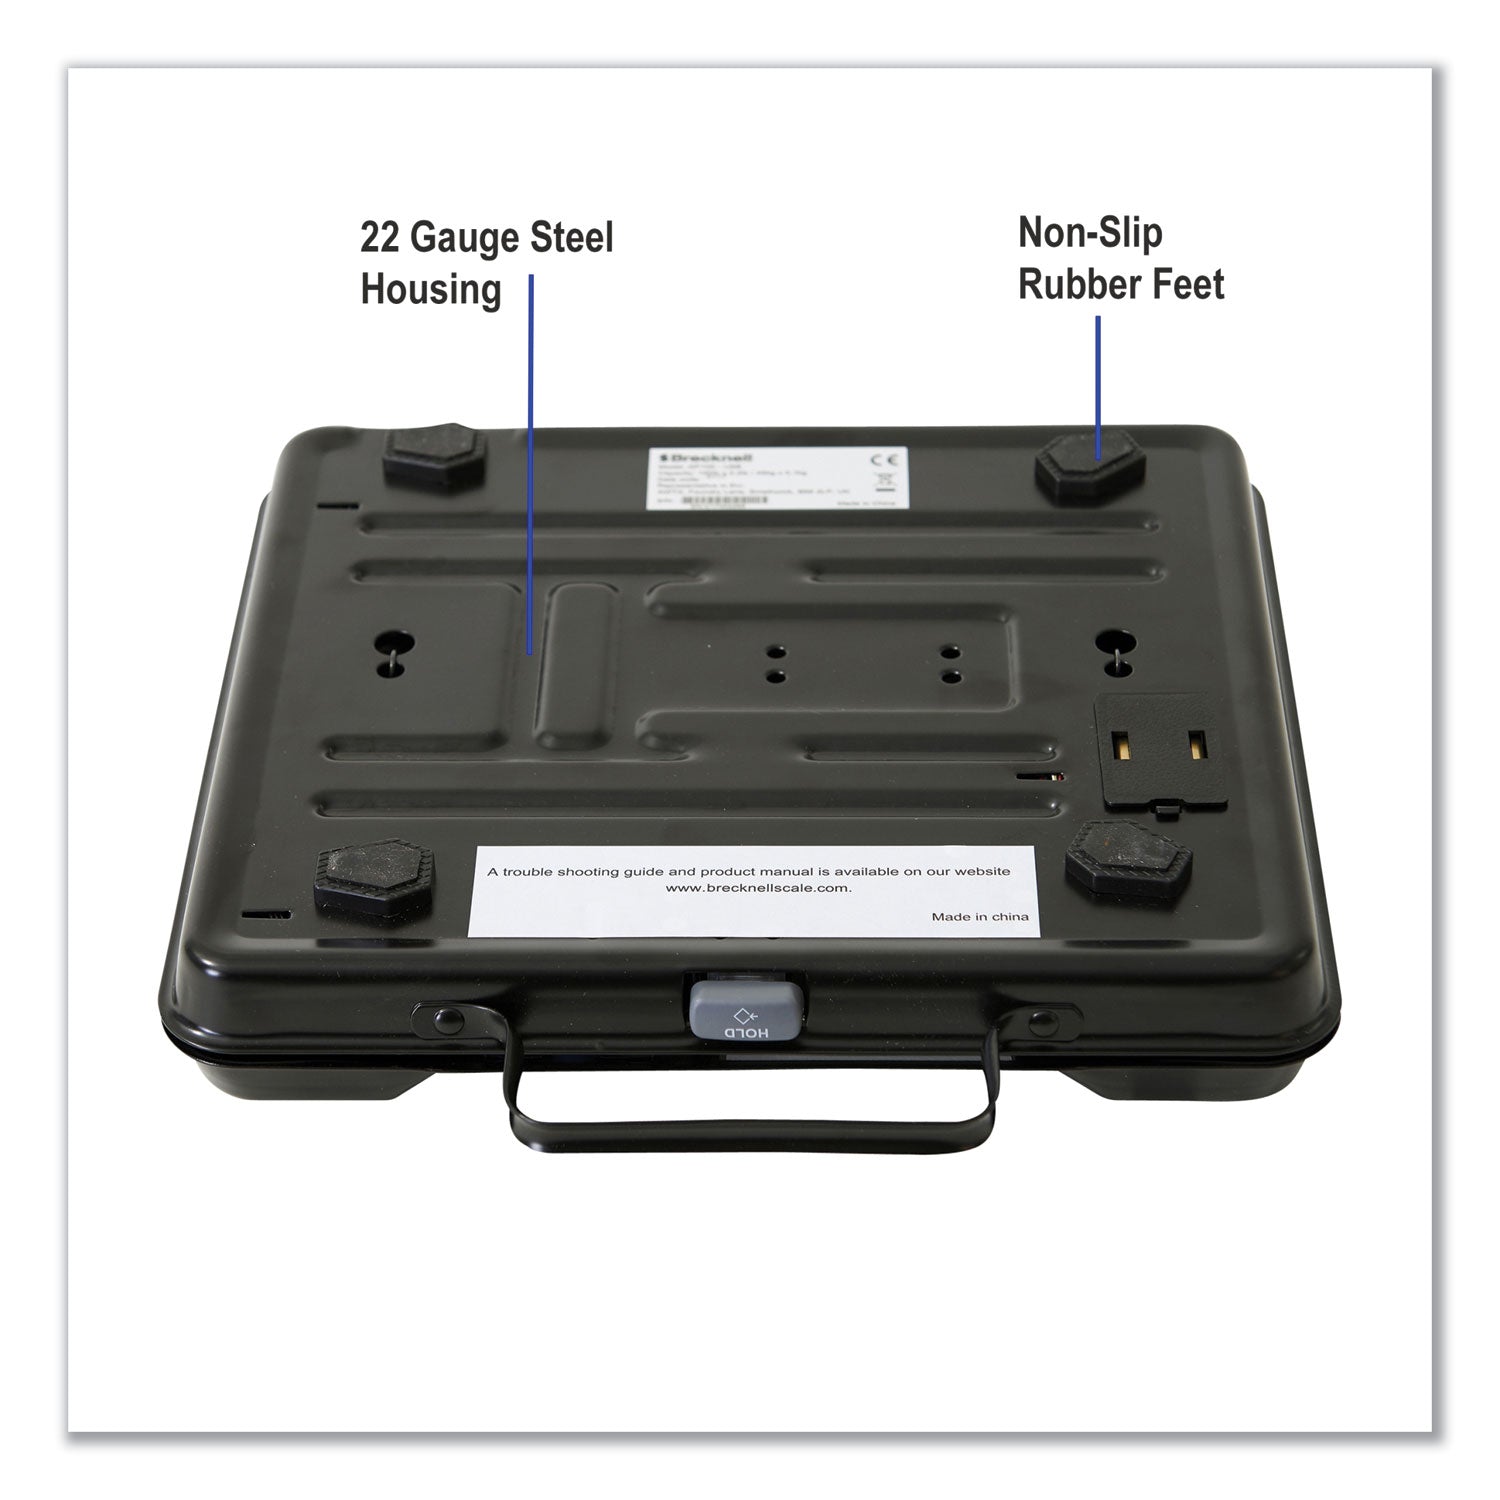 Portable Electronic Utility Bench Scale, 250 lb Capacity, 12.5 x 10.95 x 2.2 Platform - 